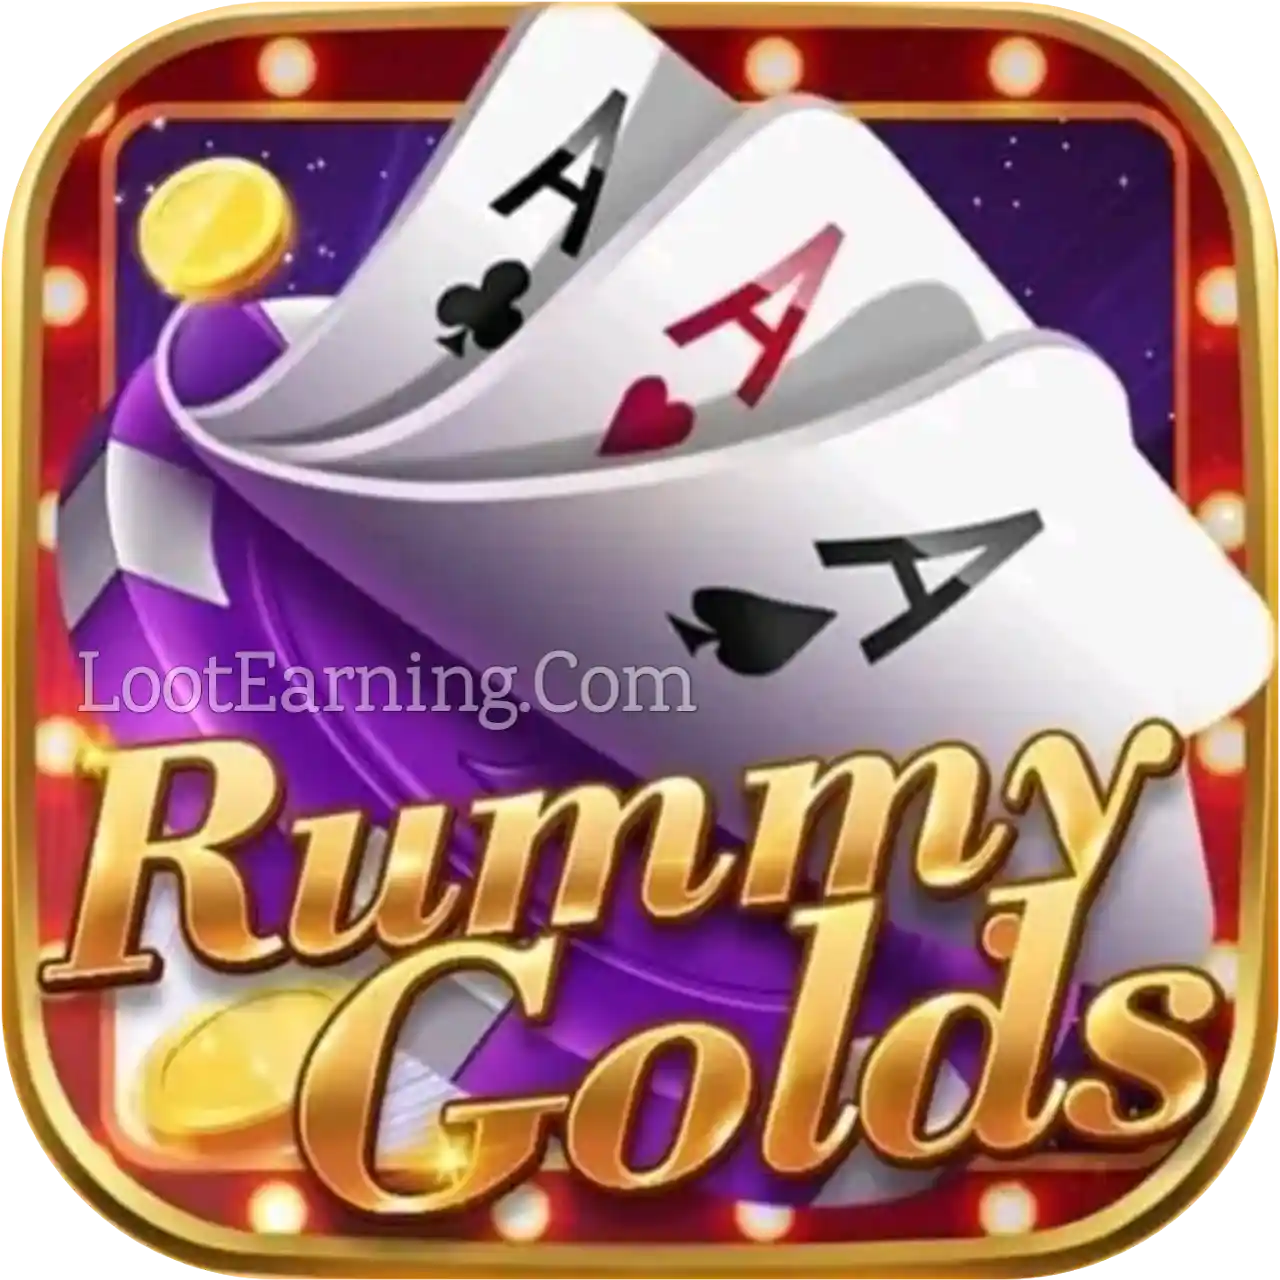 Rummy Golds - All Rummy App